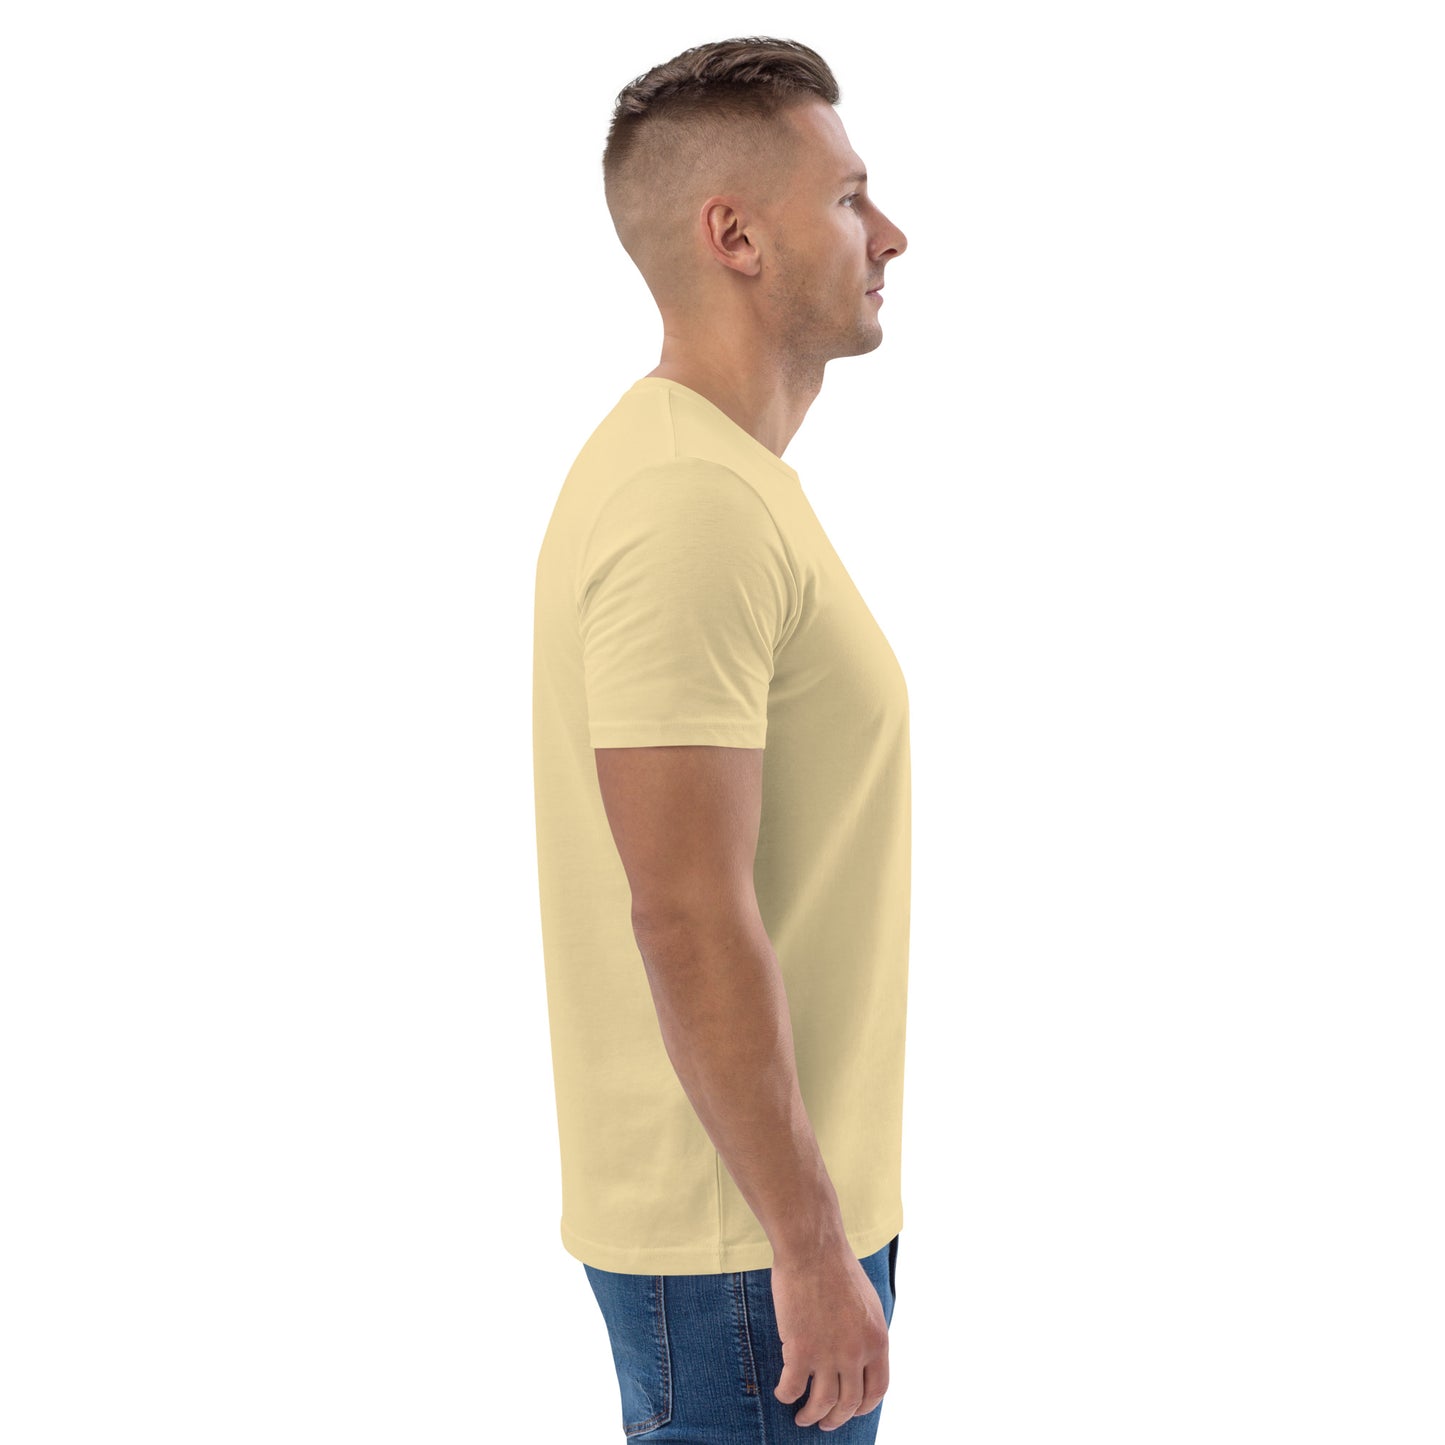 SOULSKY Logo Unisex Crewneck T-shirt - Light Yellow